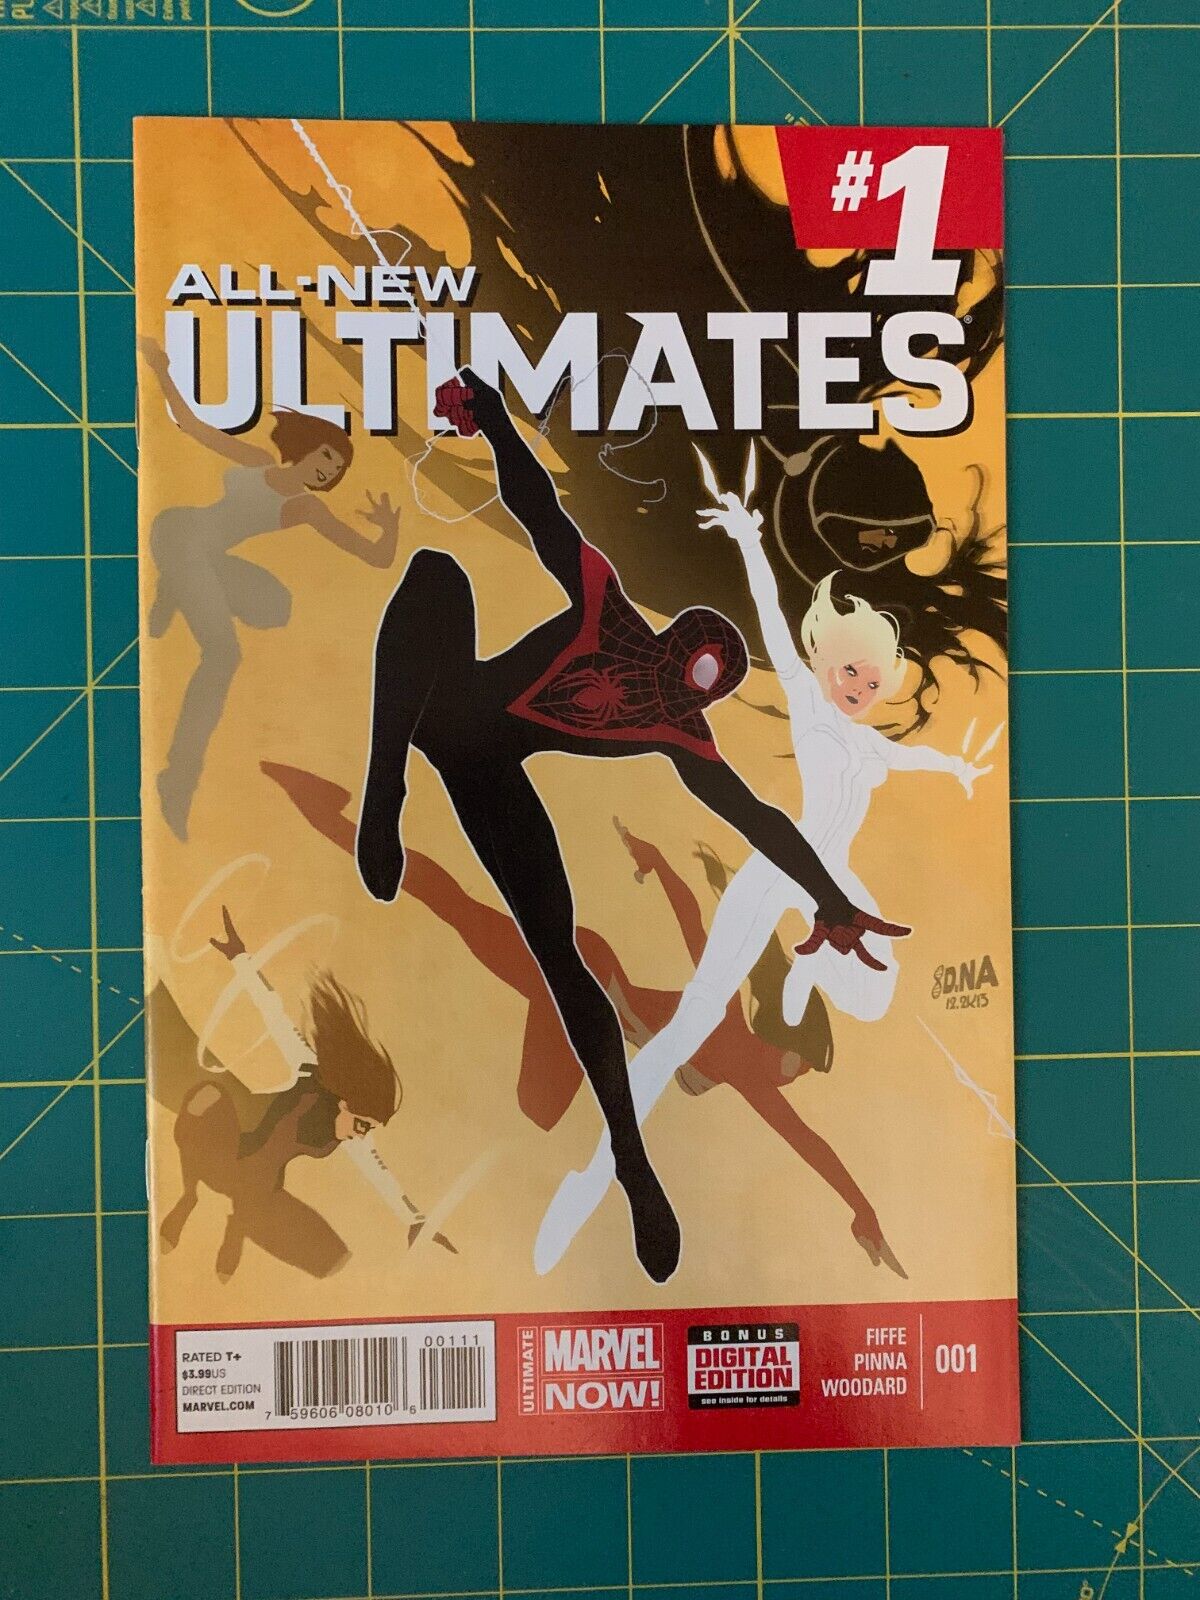 All New Ultimates #1 - Jun 2014 - (8541)